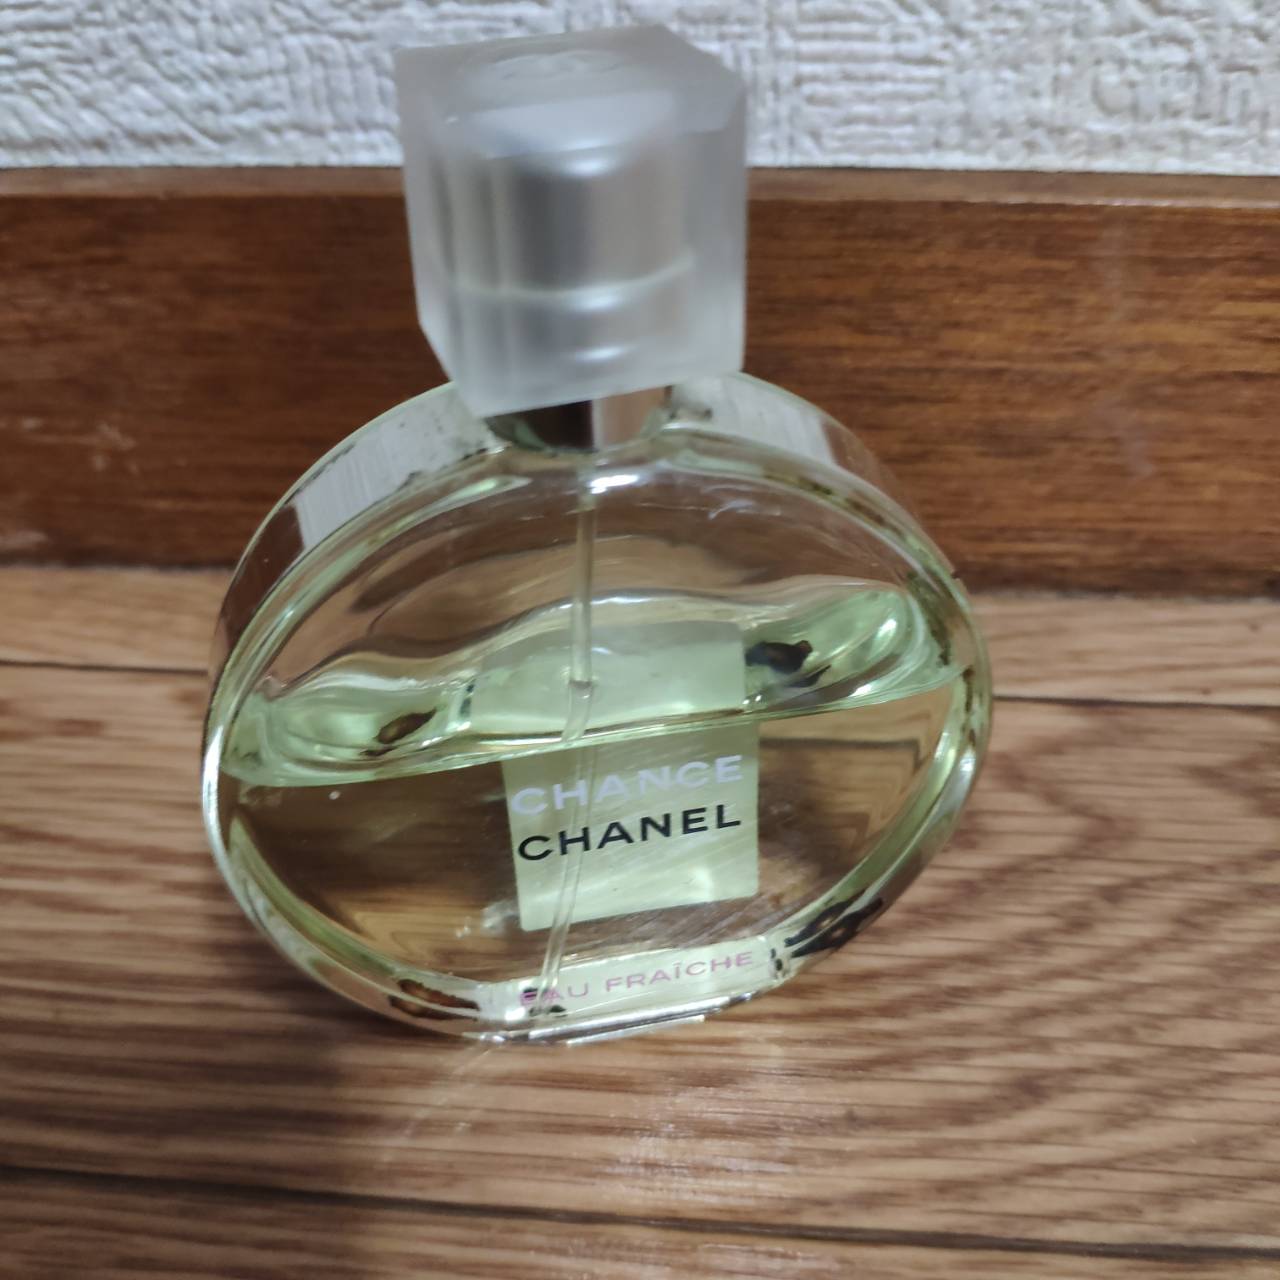 Chanel シャネル の香水 Chanceオーフレッシュ 種類や違い 似てる香水や男受けを解説 メンズok 華山未来研究室